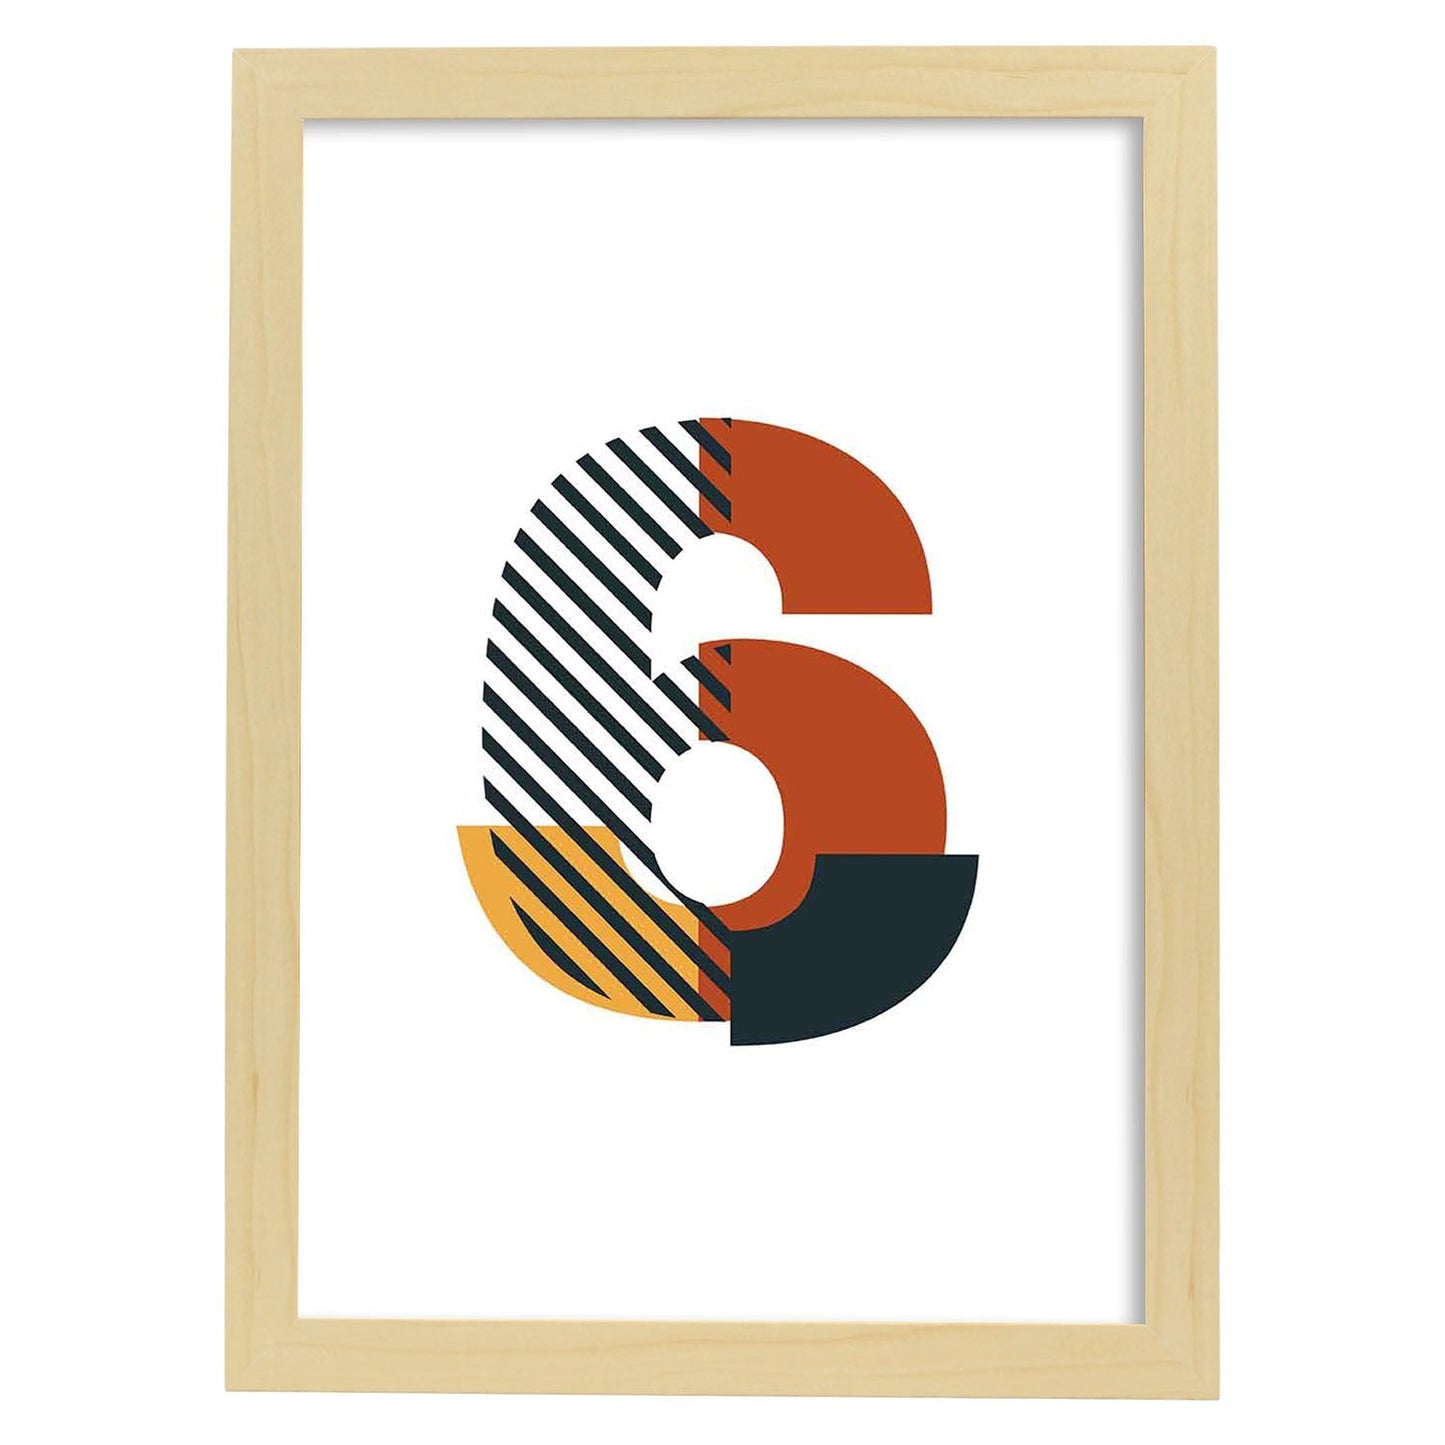 Poster de número 6. Lámina estilo Geometria con imágenes del alfabeto.-Artwork-Nacnic-A4-Marco Madera clara-Nacnic Estudio SL